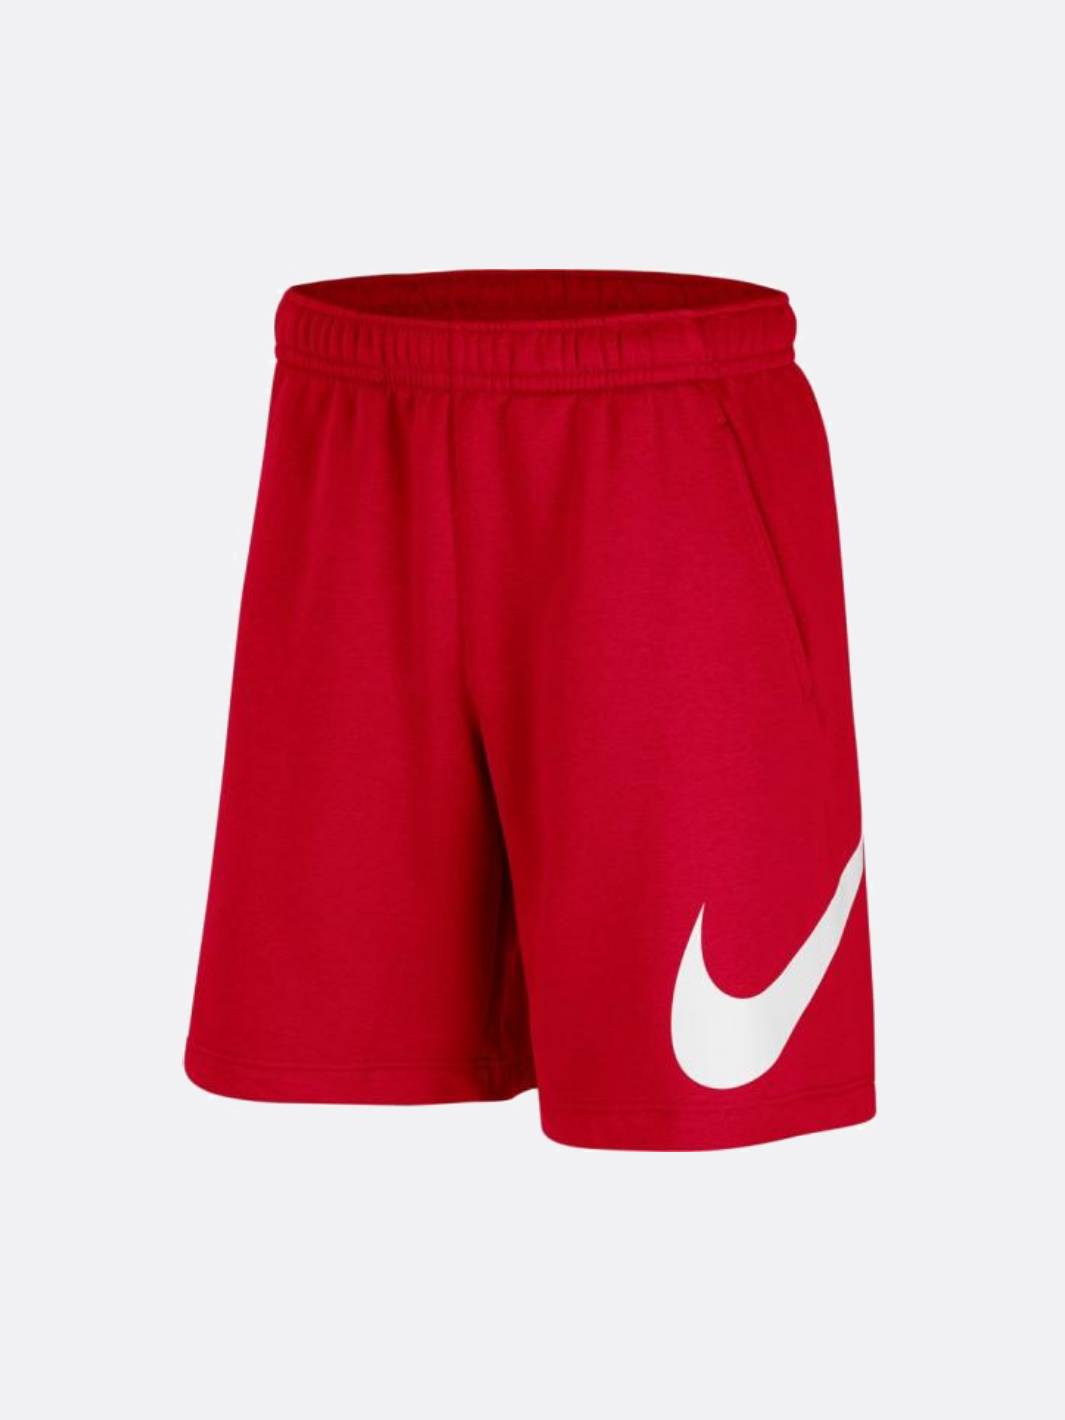 Nike - Men - Club Sweat Short - University Red/White - Nohble